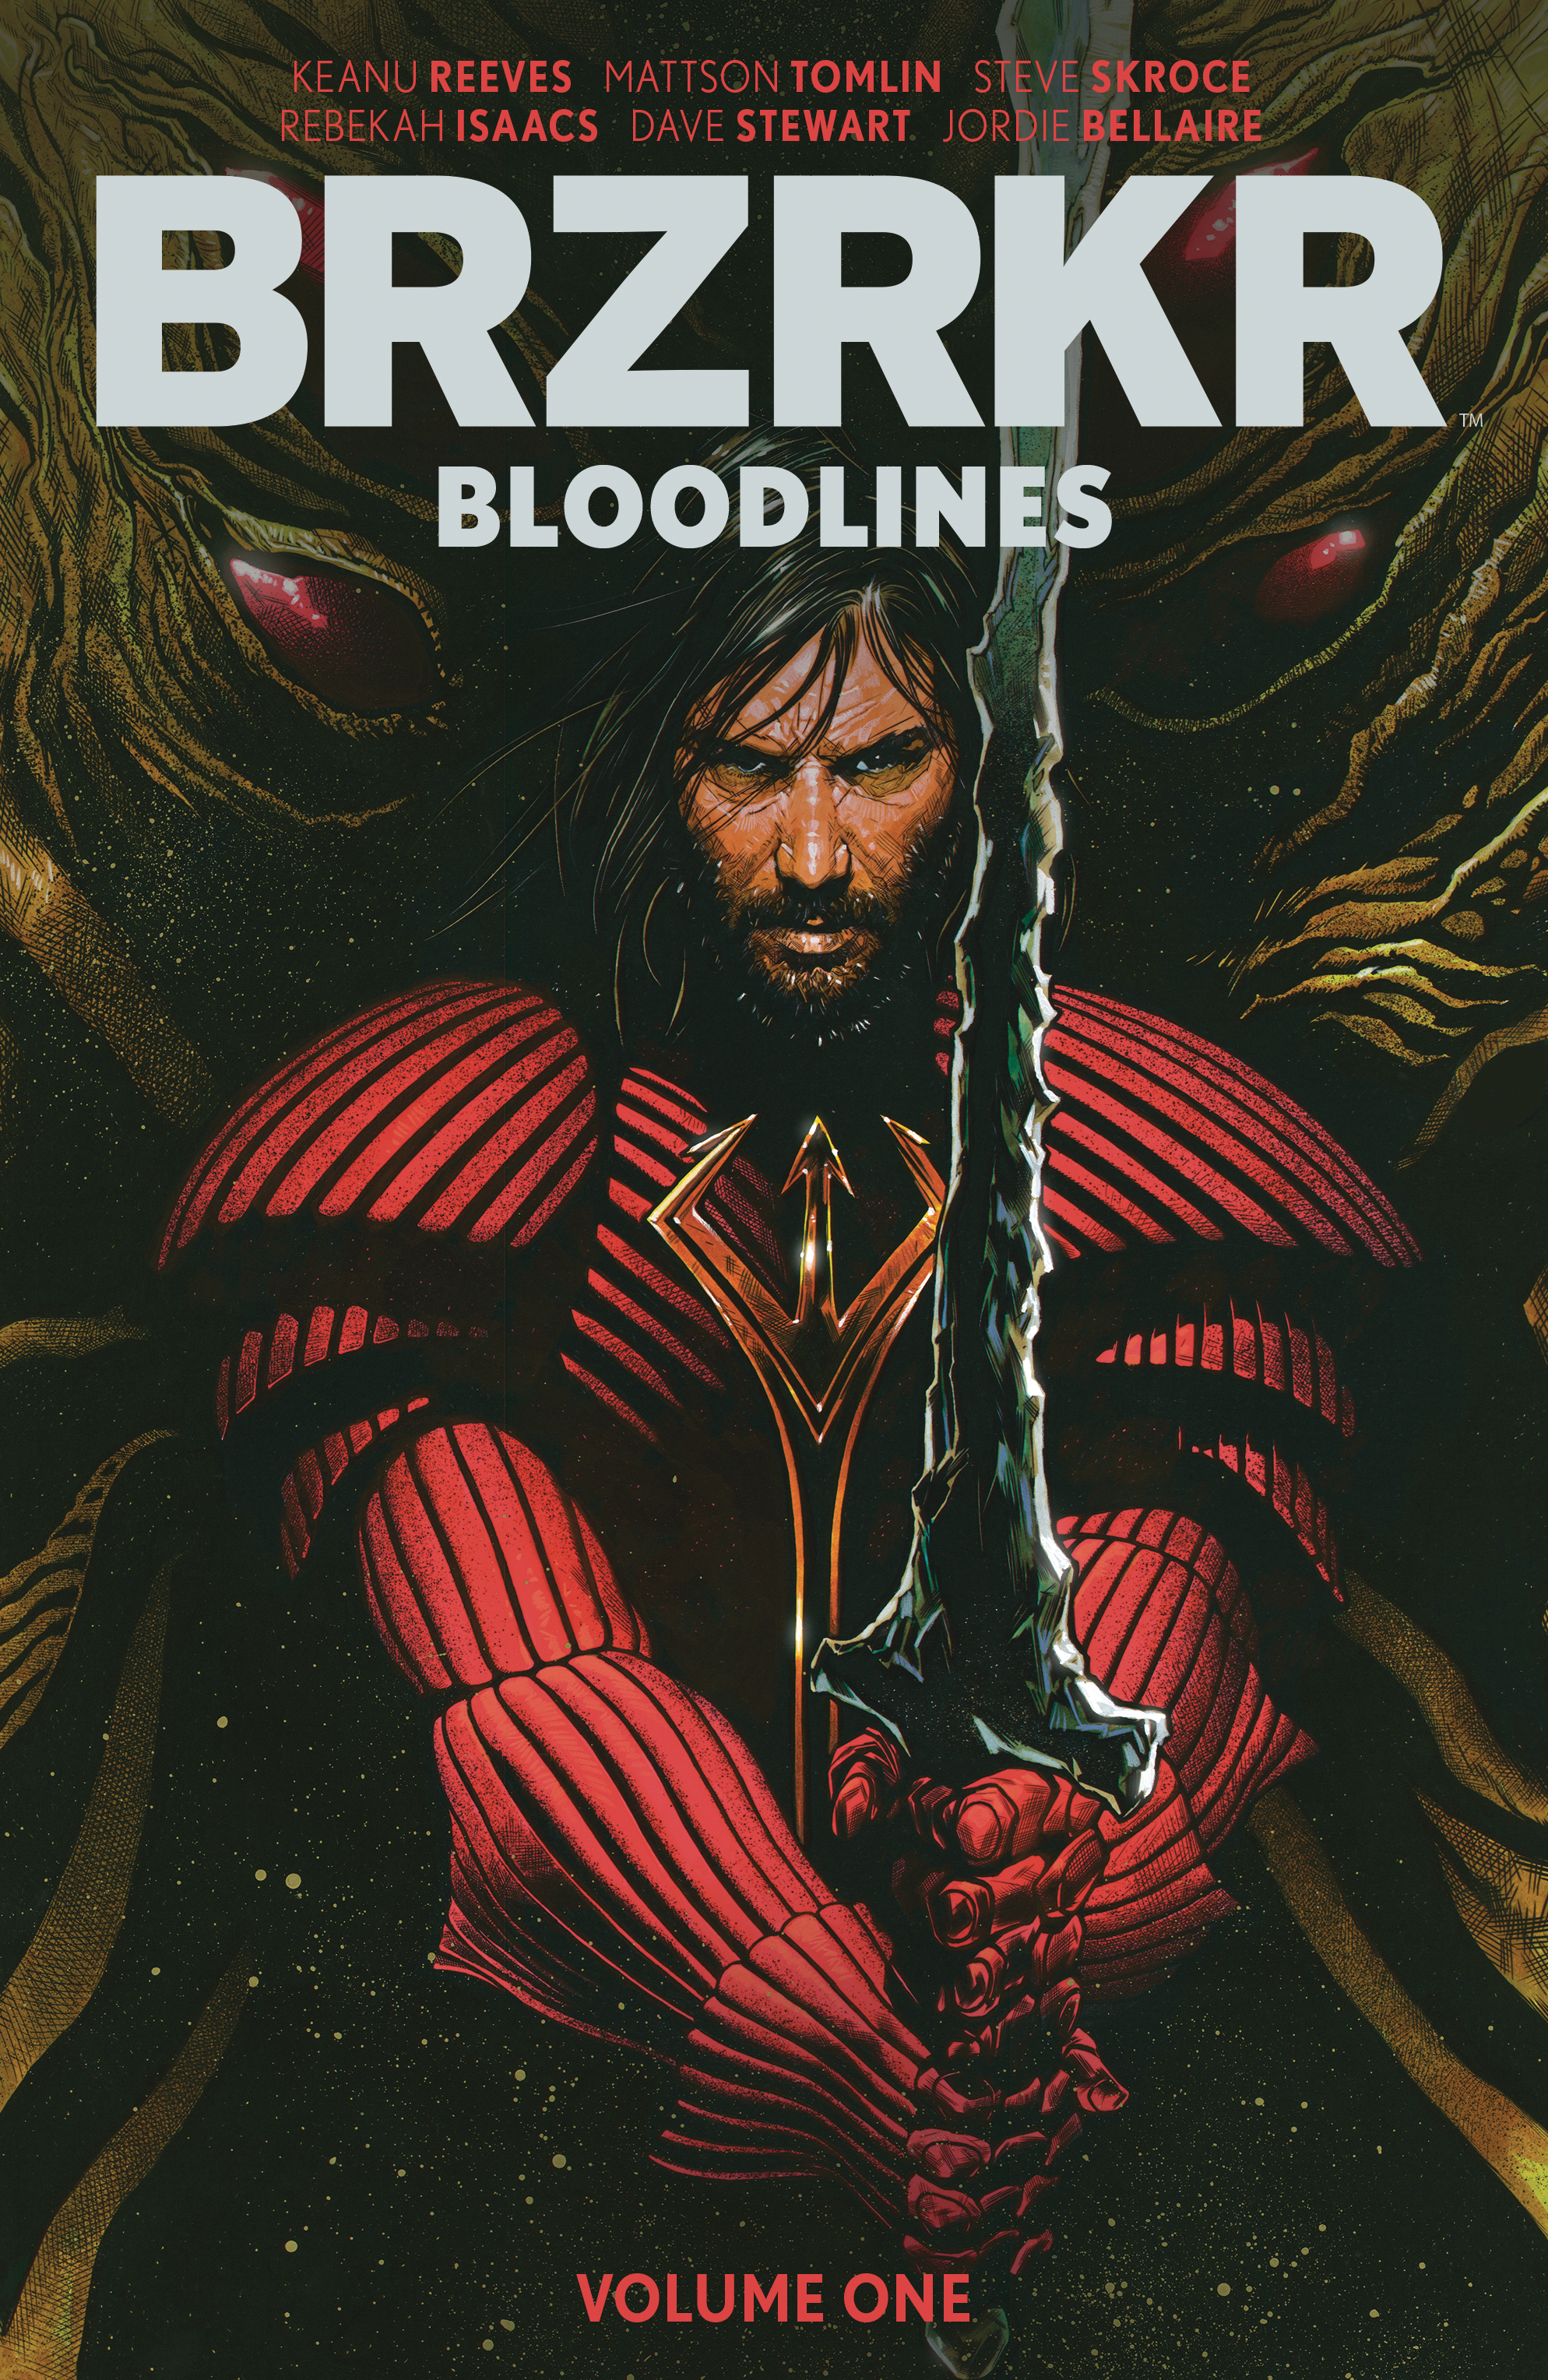 BRZRKR Bloodlines Graphic Novel Volume 1